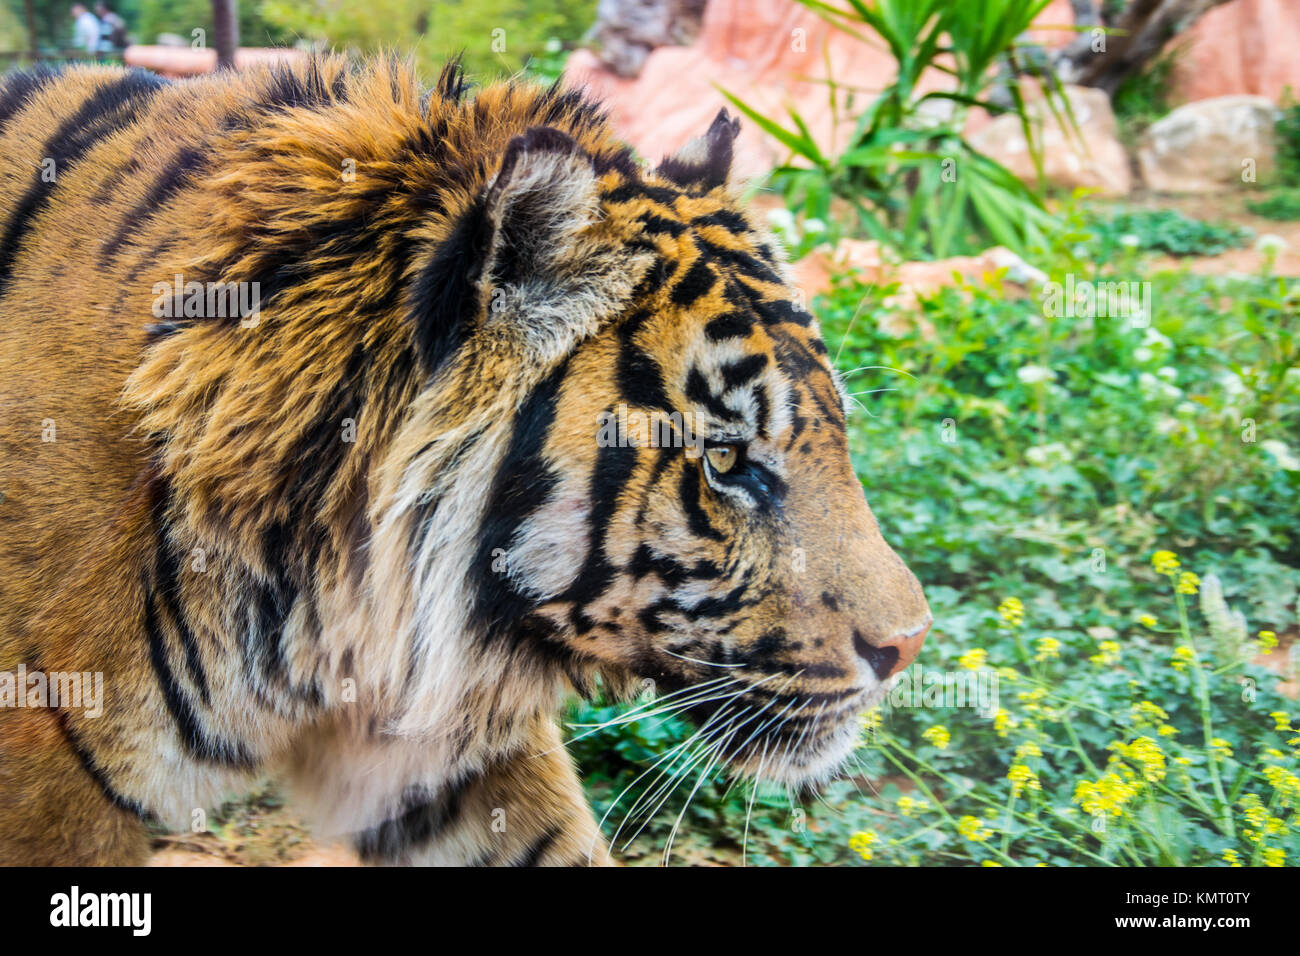 Asian tiger at the zoo Stock Photo